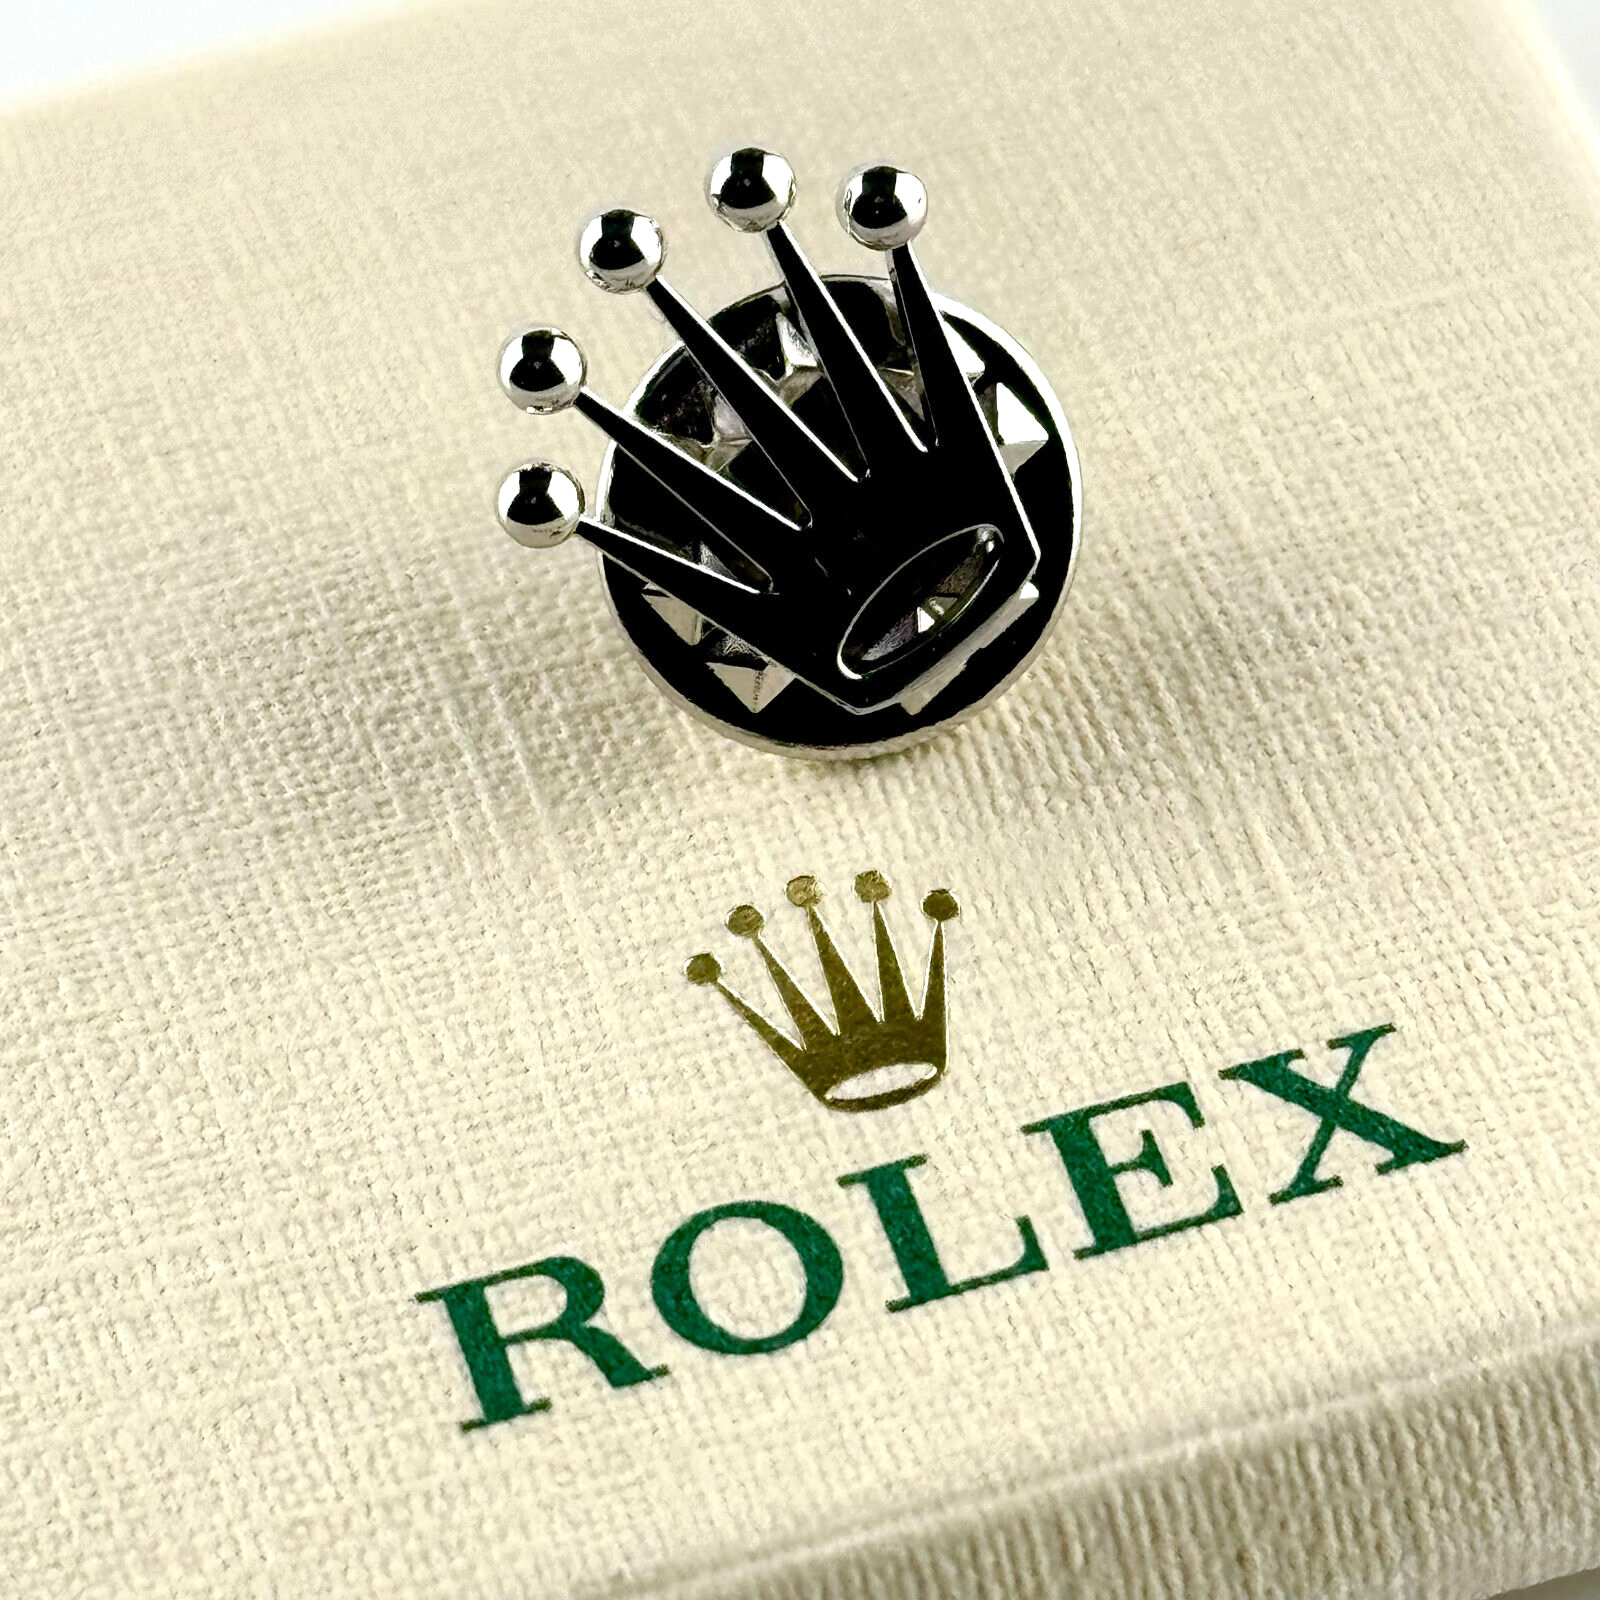  Rolex Pin Stecknadel Steckkopf Anstecker Anstecknadel badge Silber Silver